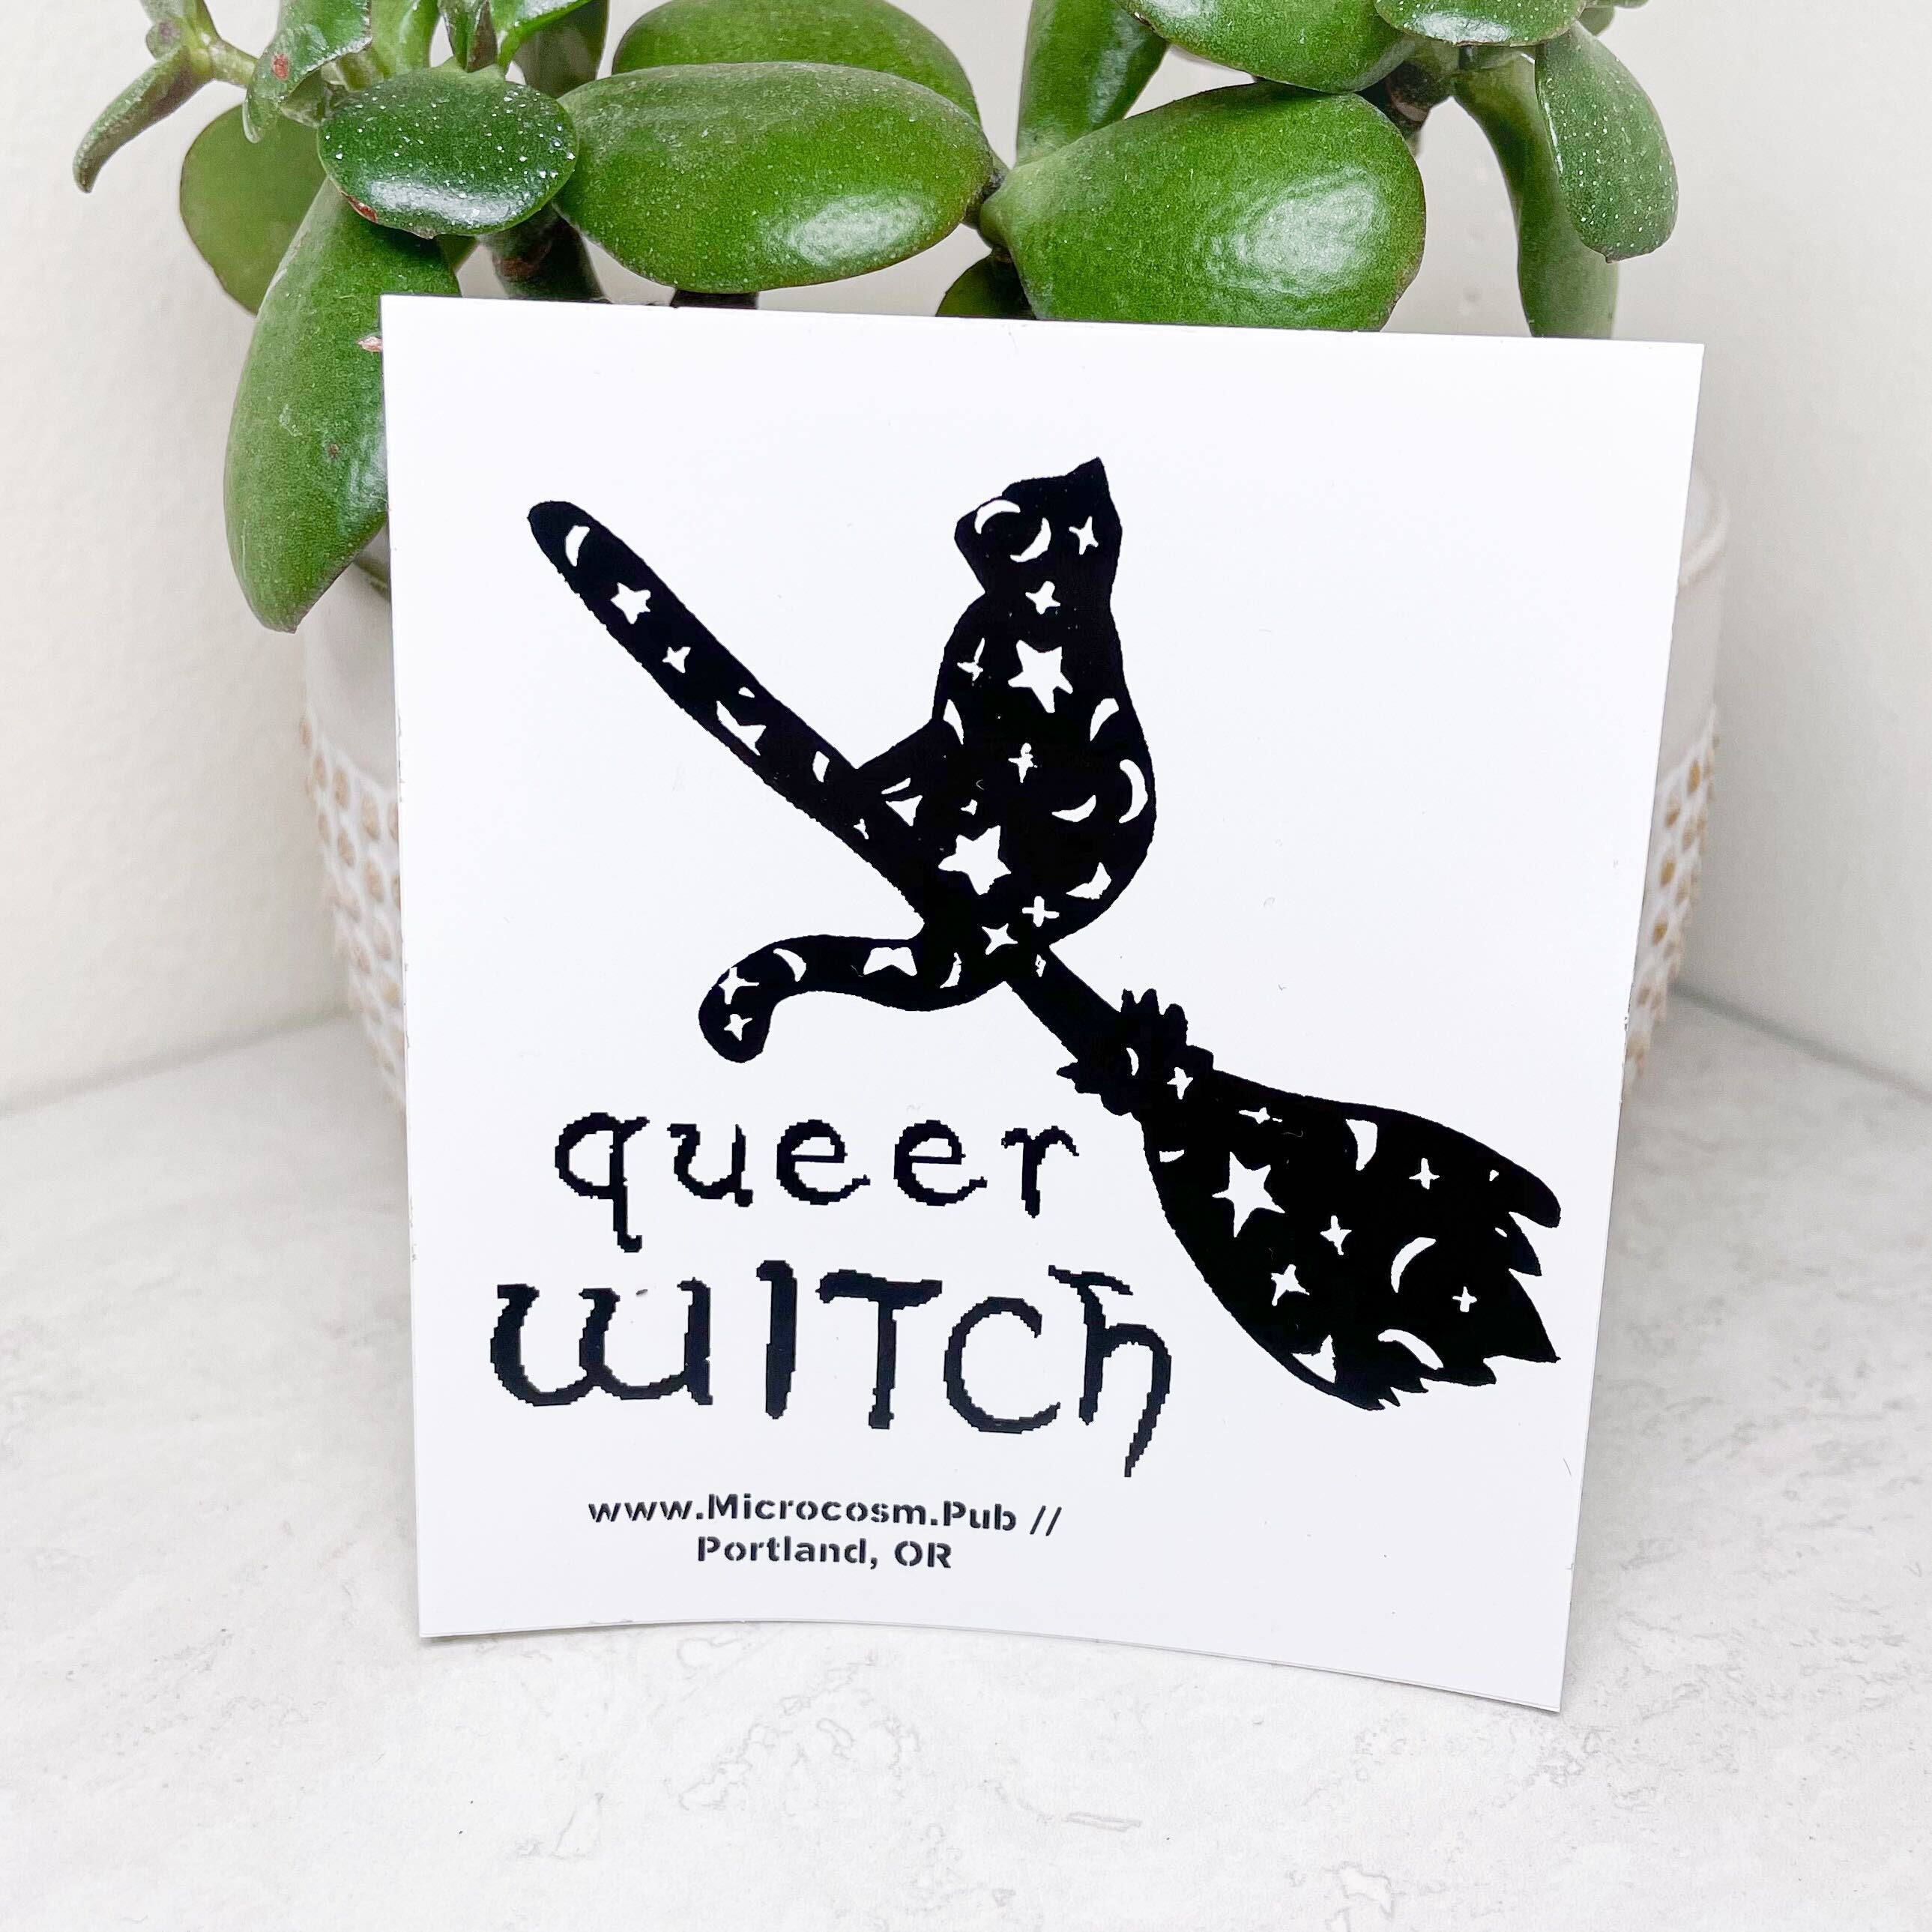 Queer Witch Sticker